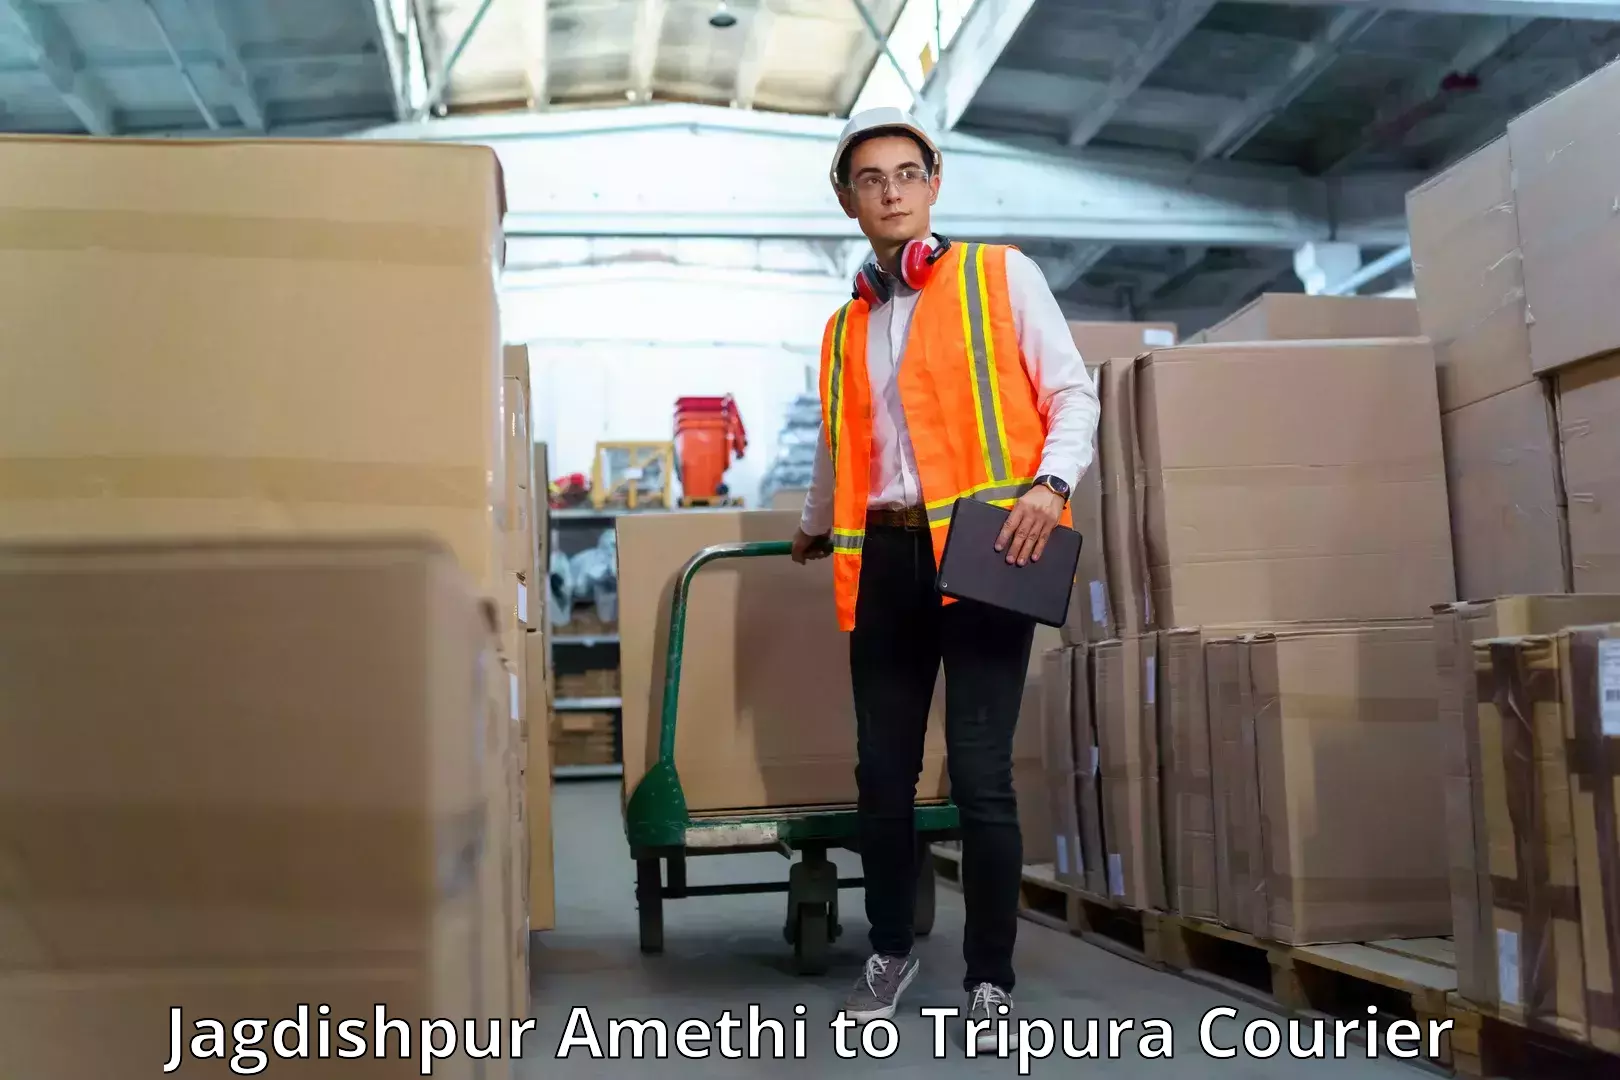 Comprehensive shipping network Jagdishpur Amethi to Udaipur Tripura